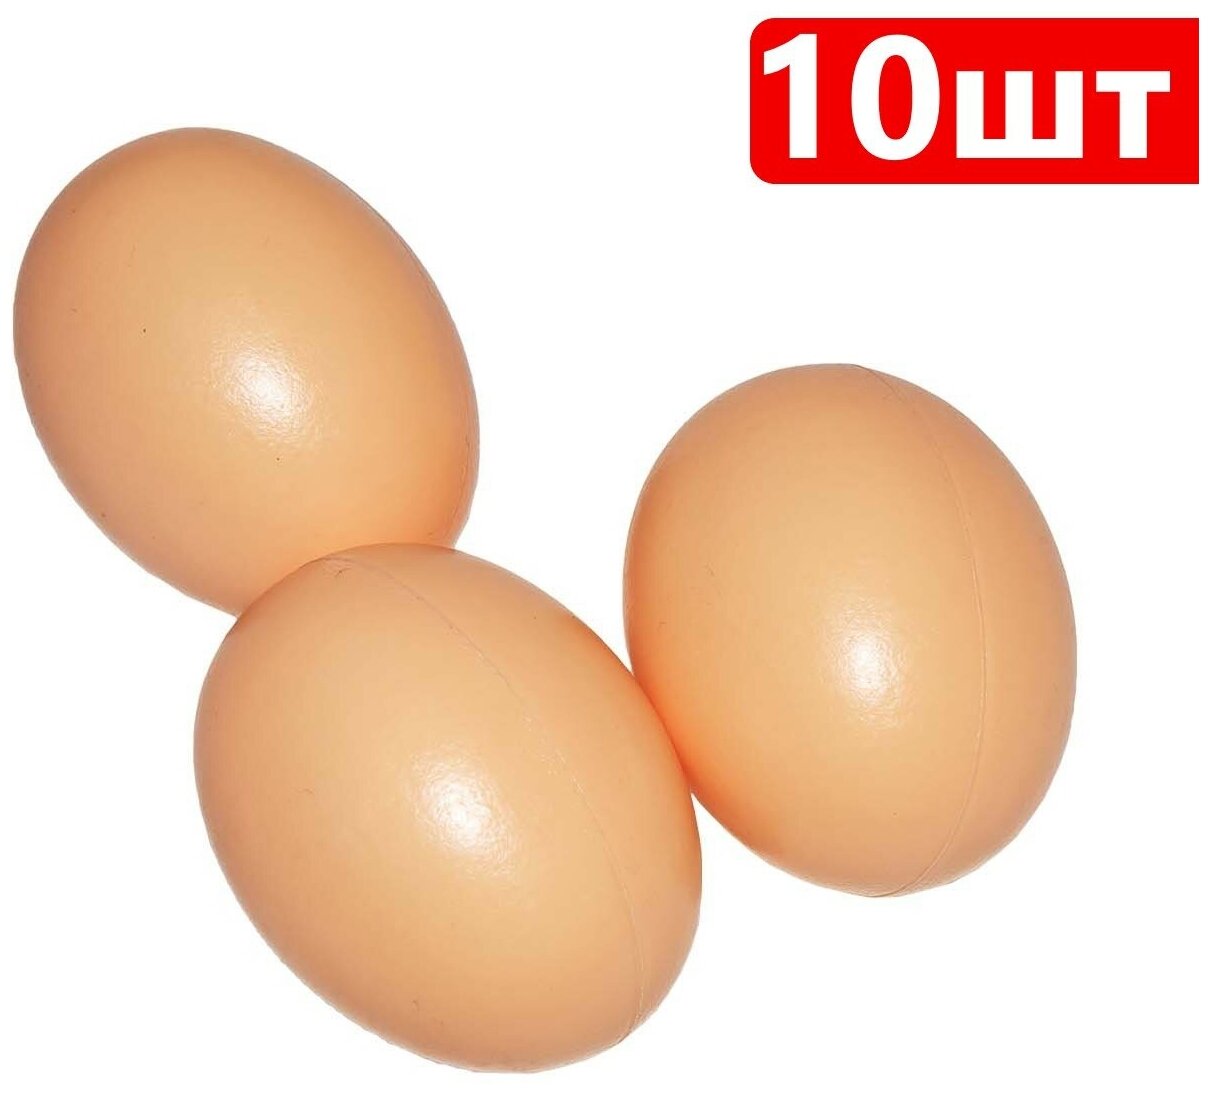 Яйцо подкладное 10 шт